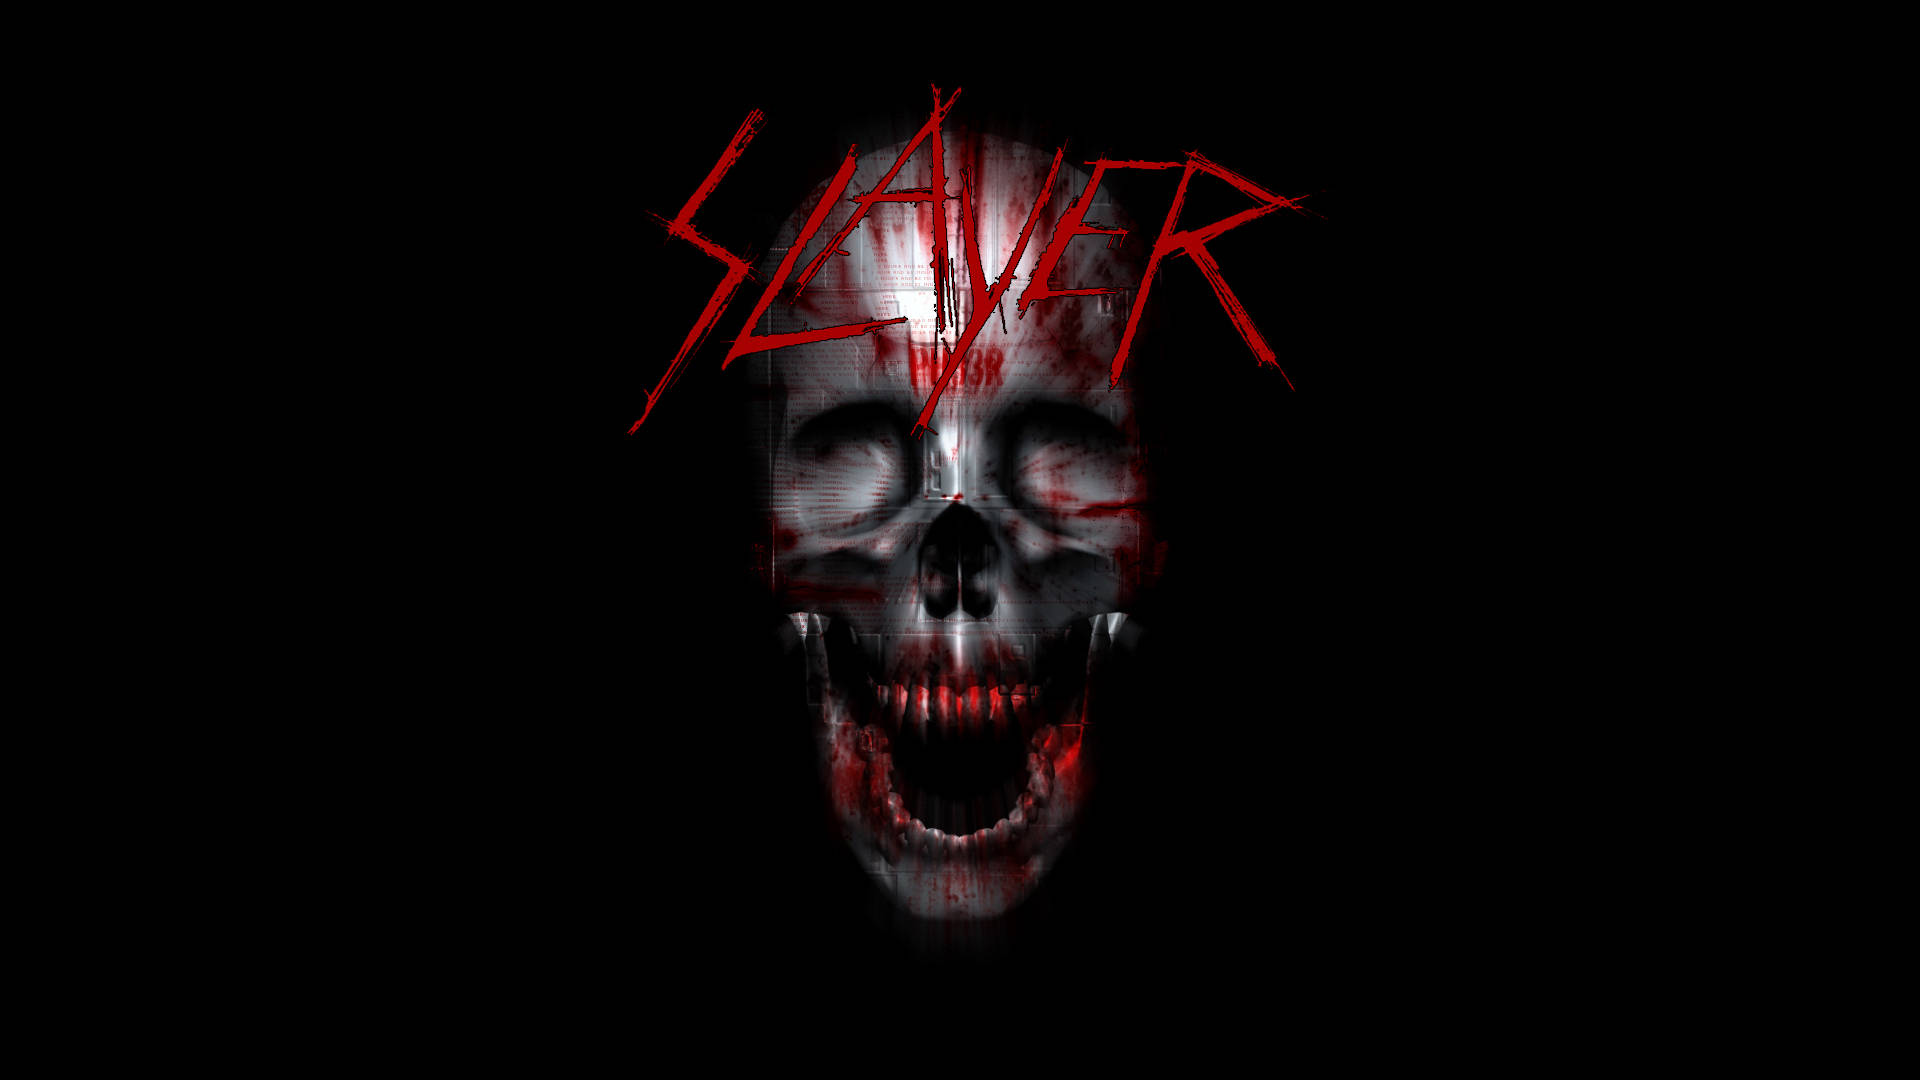 Creepy Face Slayer Band